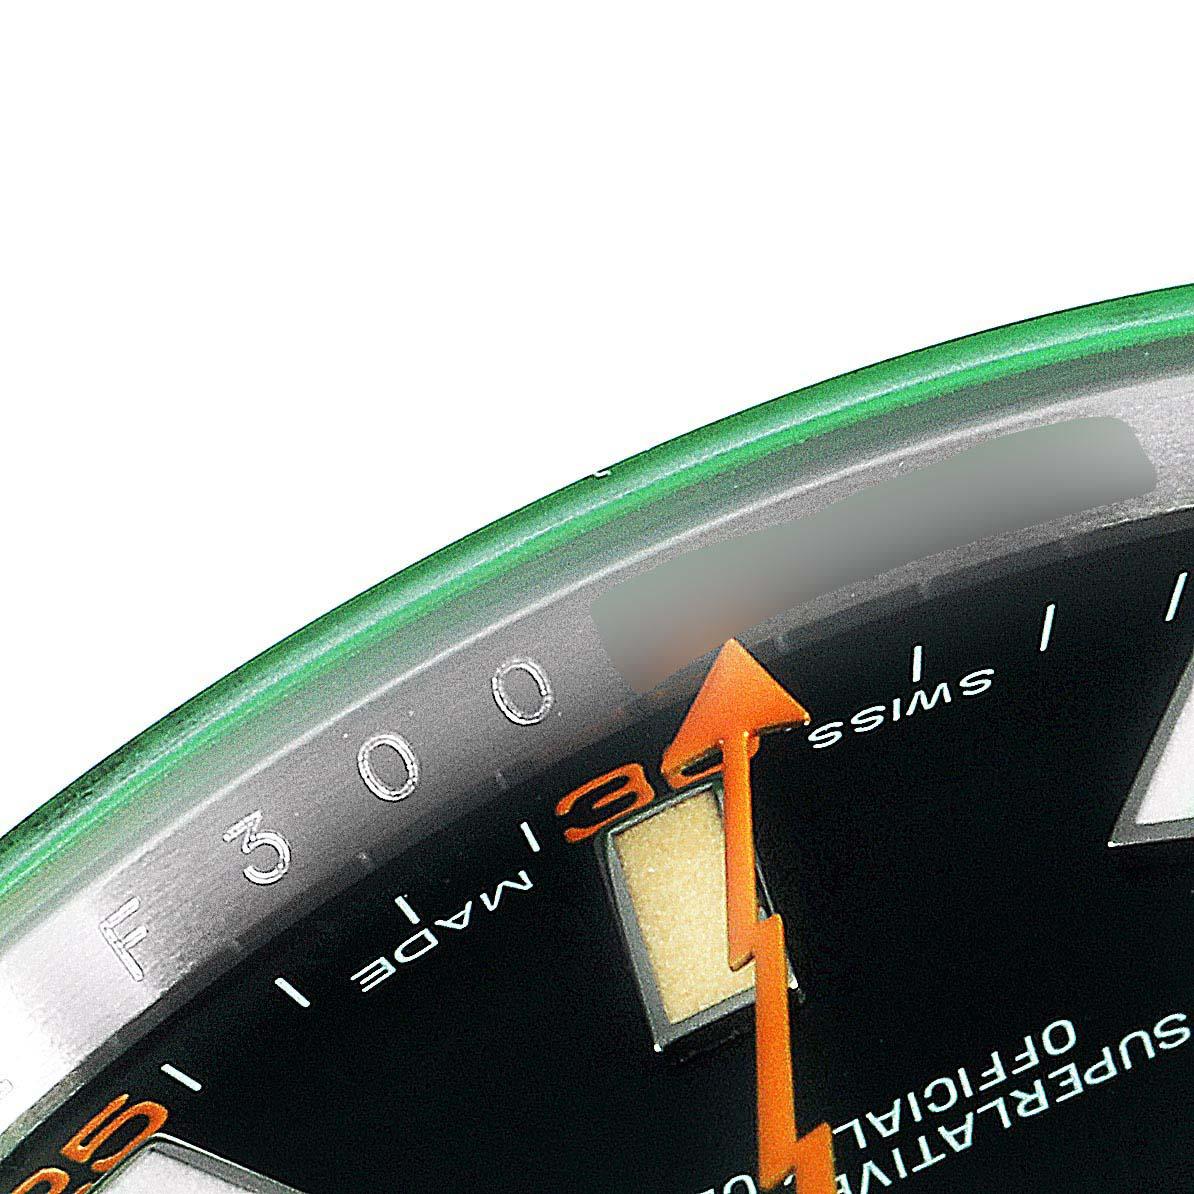 Rolex Milgauss Black Dial Green Crystal Steel Men's Watch 116400V Box Card For Sale 3